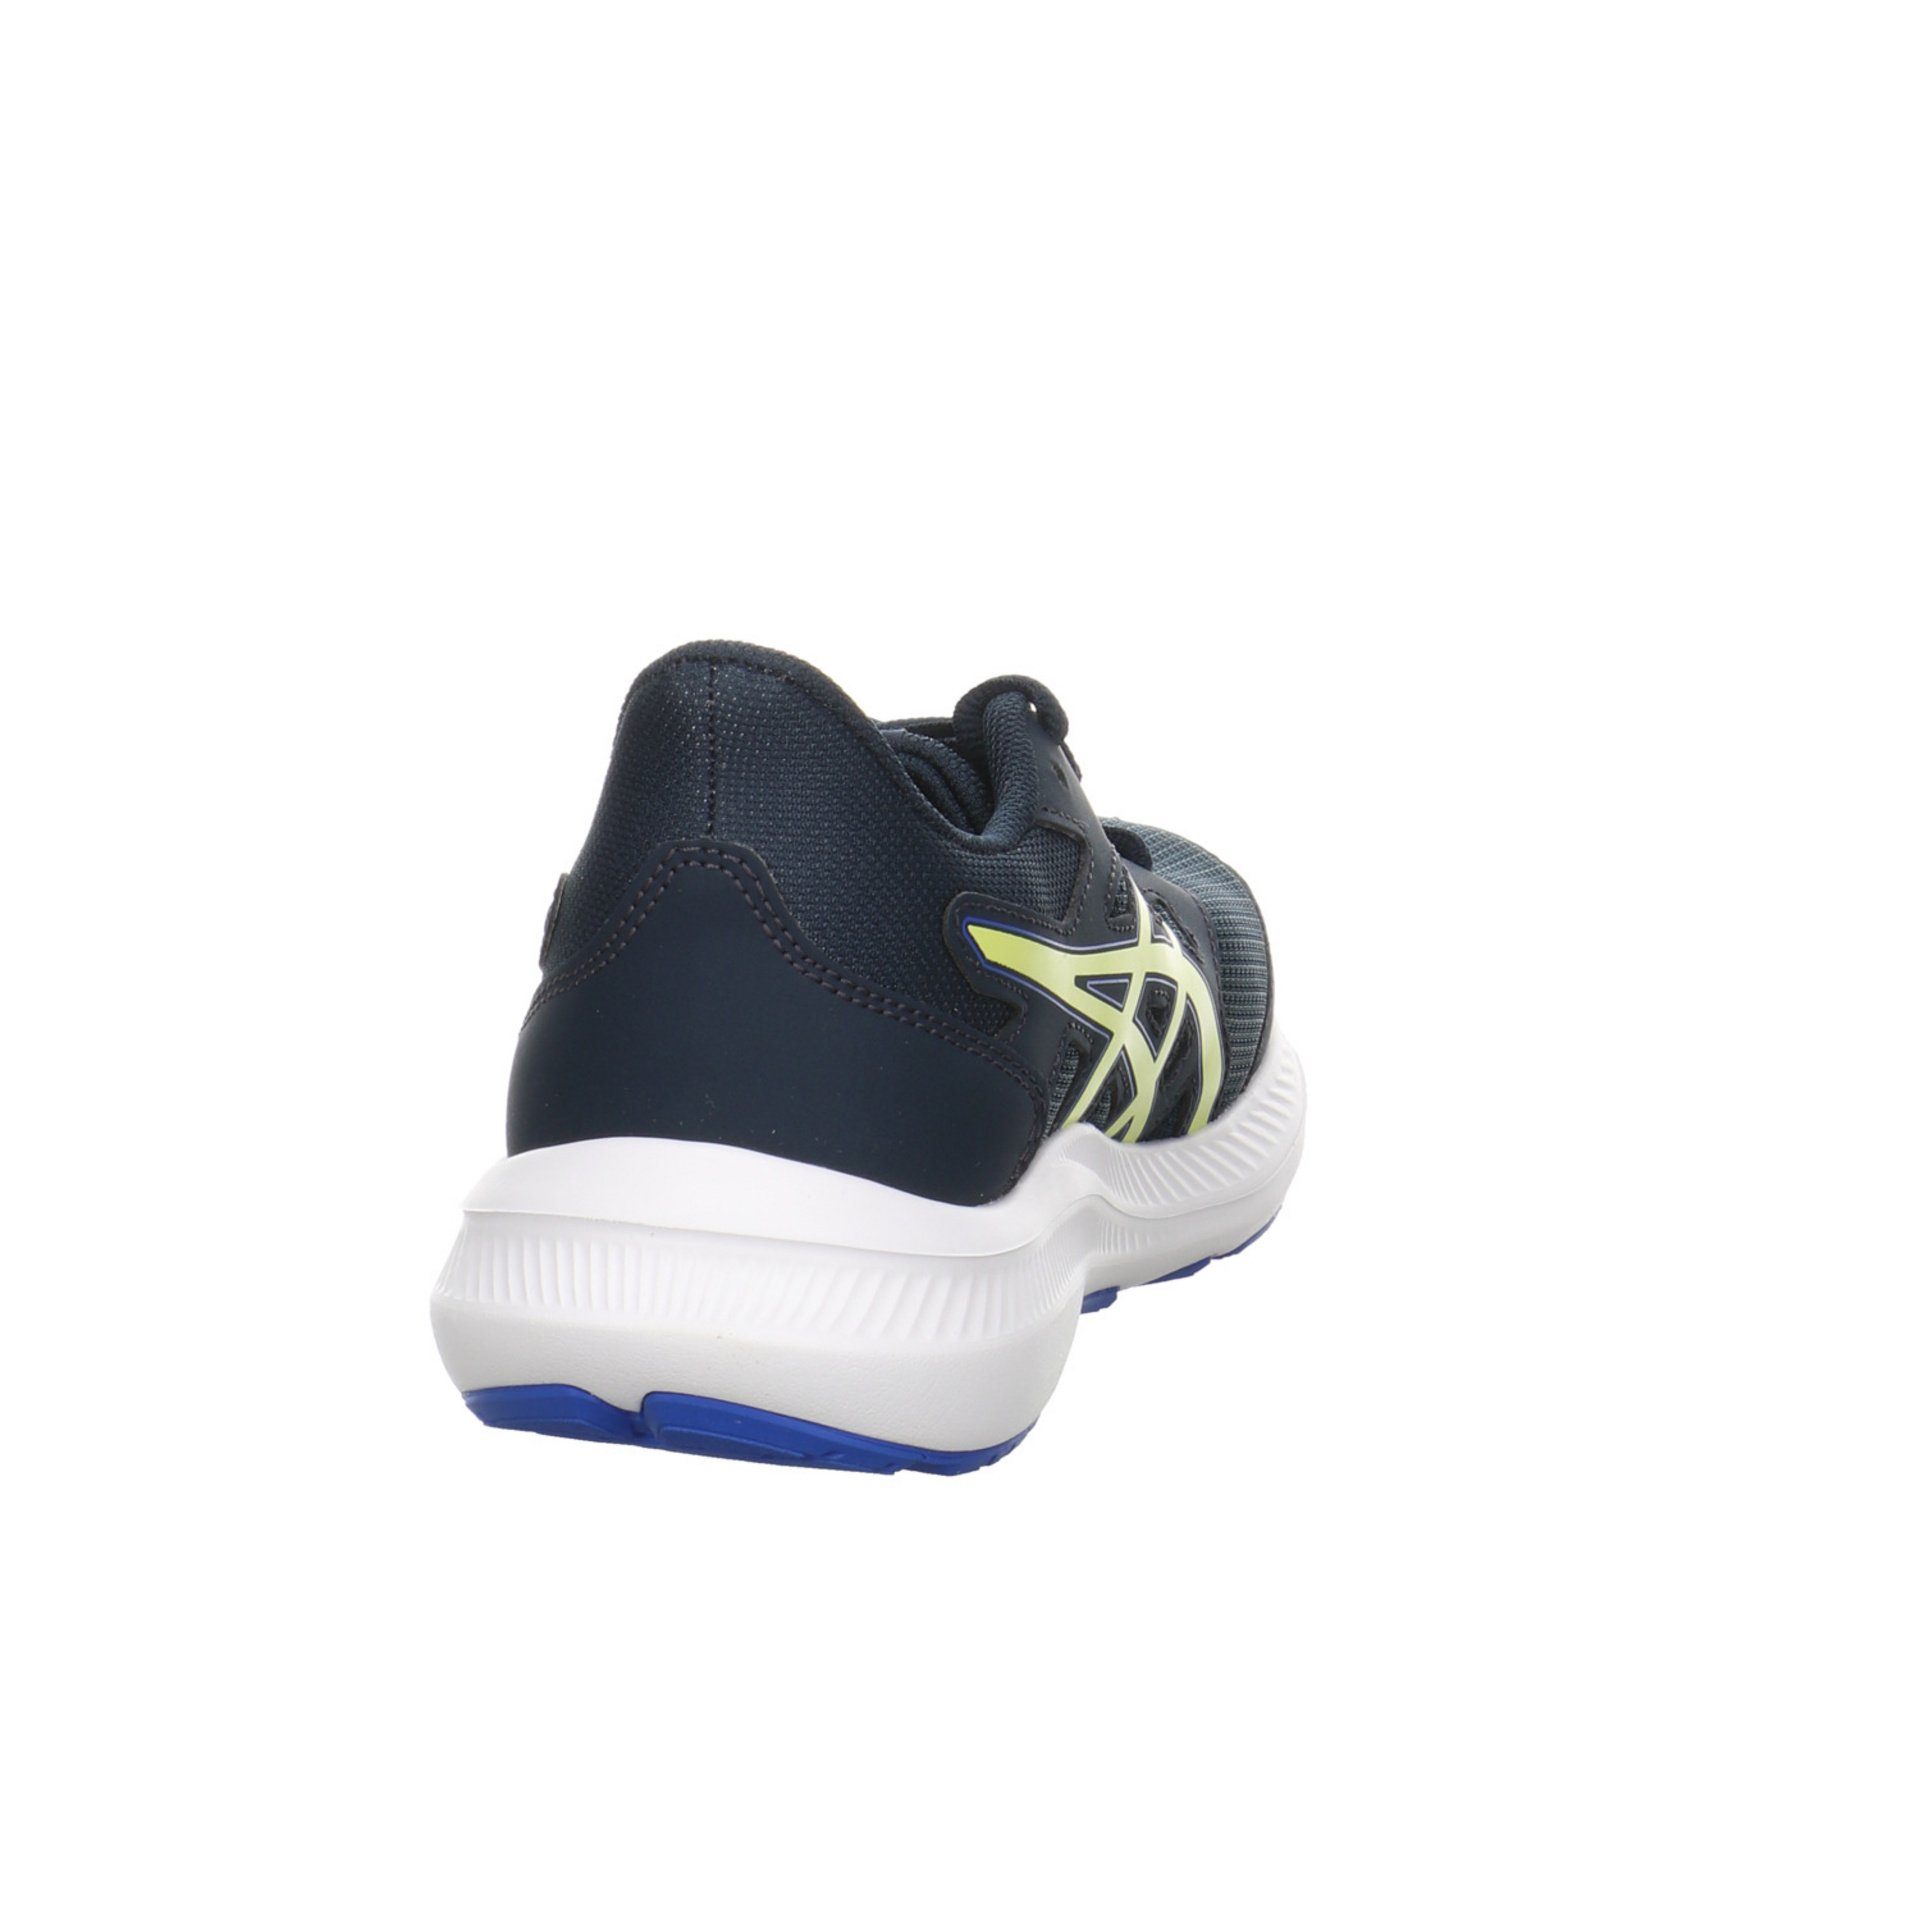 Mädchen Synthetikkombination Schuhe BLUE/GLOW YEL Sneaker 4 Sneaker GS Sportschuh Jolt Asics FRENCH